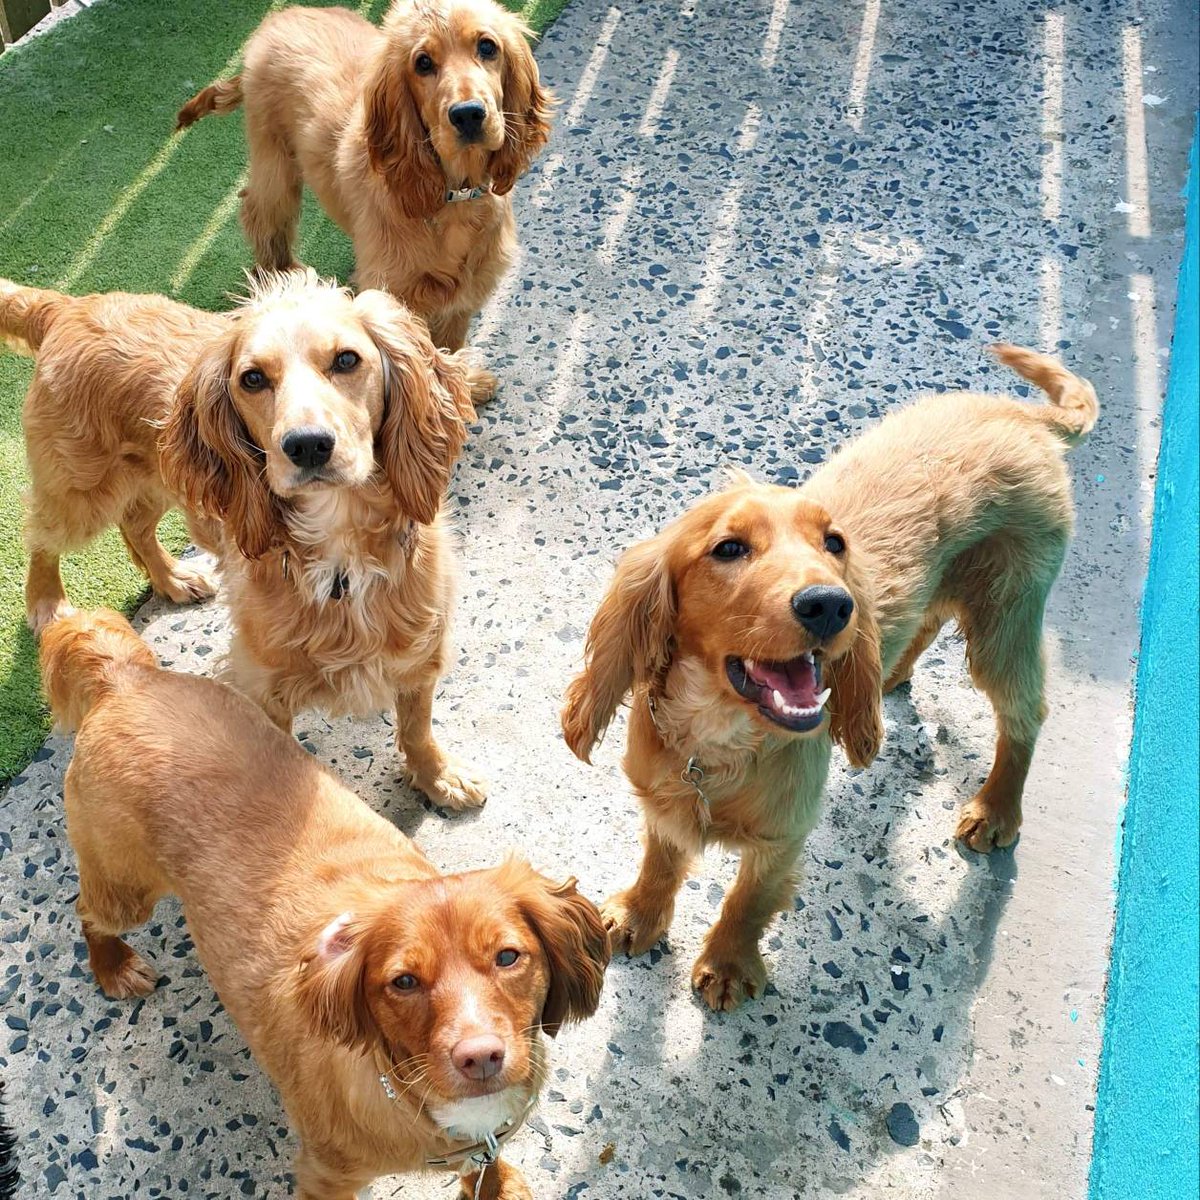 The golden pack 🐕🐕🐕🐕🐕

#doggos #dogsofinstagram #cockerspaniels #dogbreeds #mixedbreeds #goldencockerspaniel #dogsoftheworld #dogs #doggies #pets #petservices